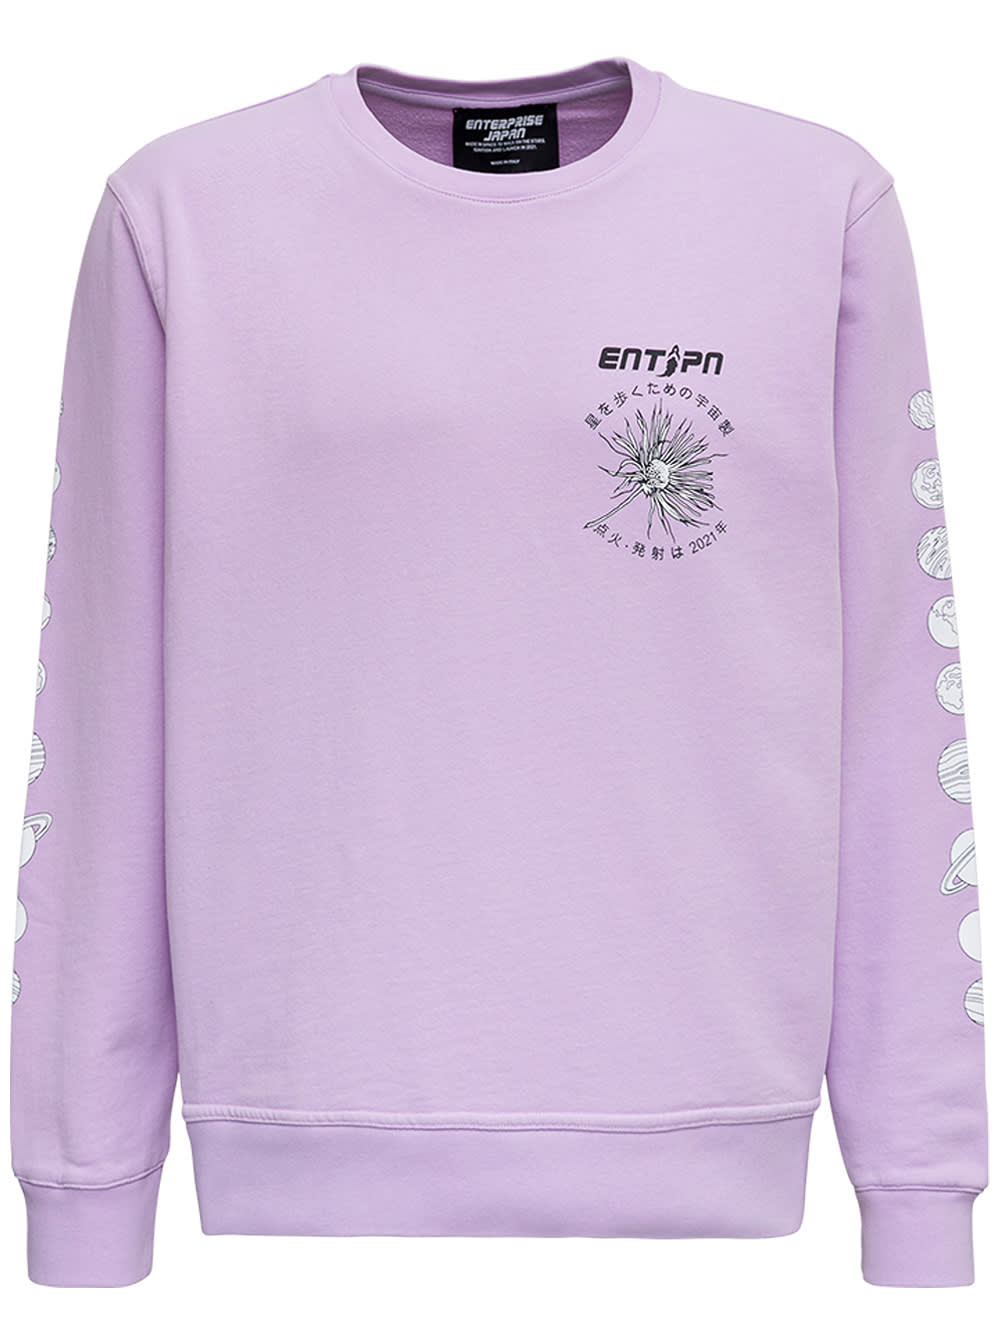 Enterprise Japan Lilac Cotton Sweatshirt With Print